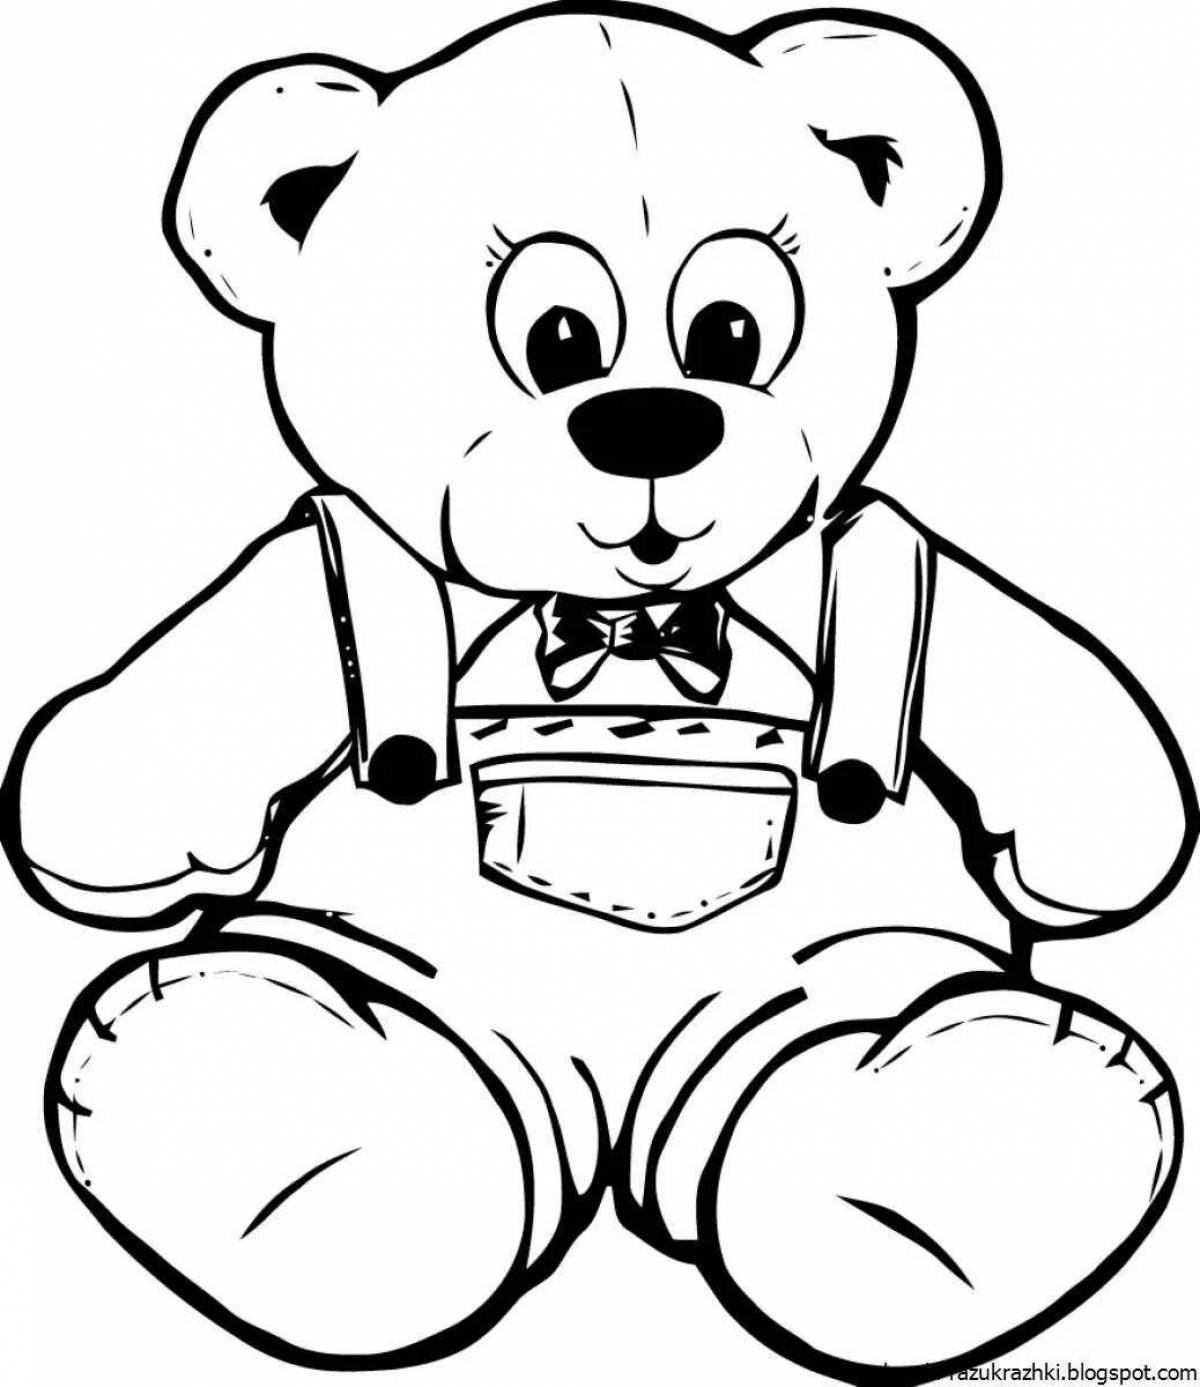 Prancing Teddy Bear coloring page